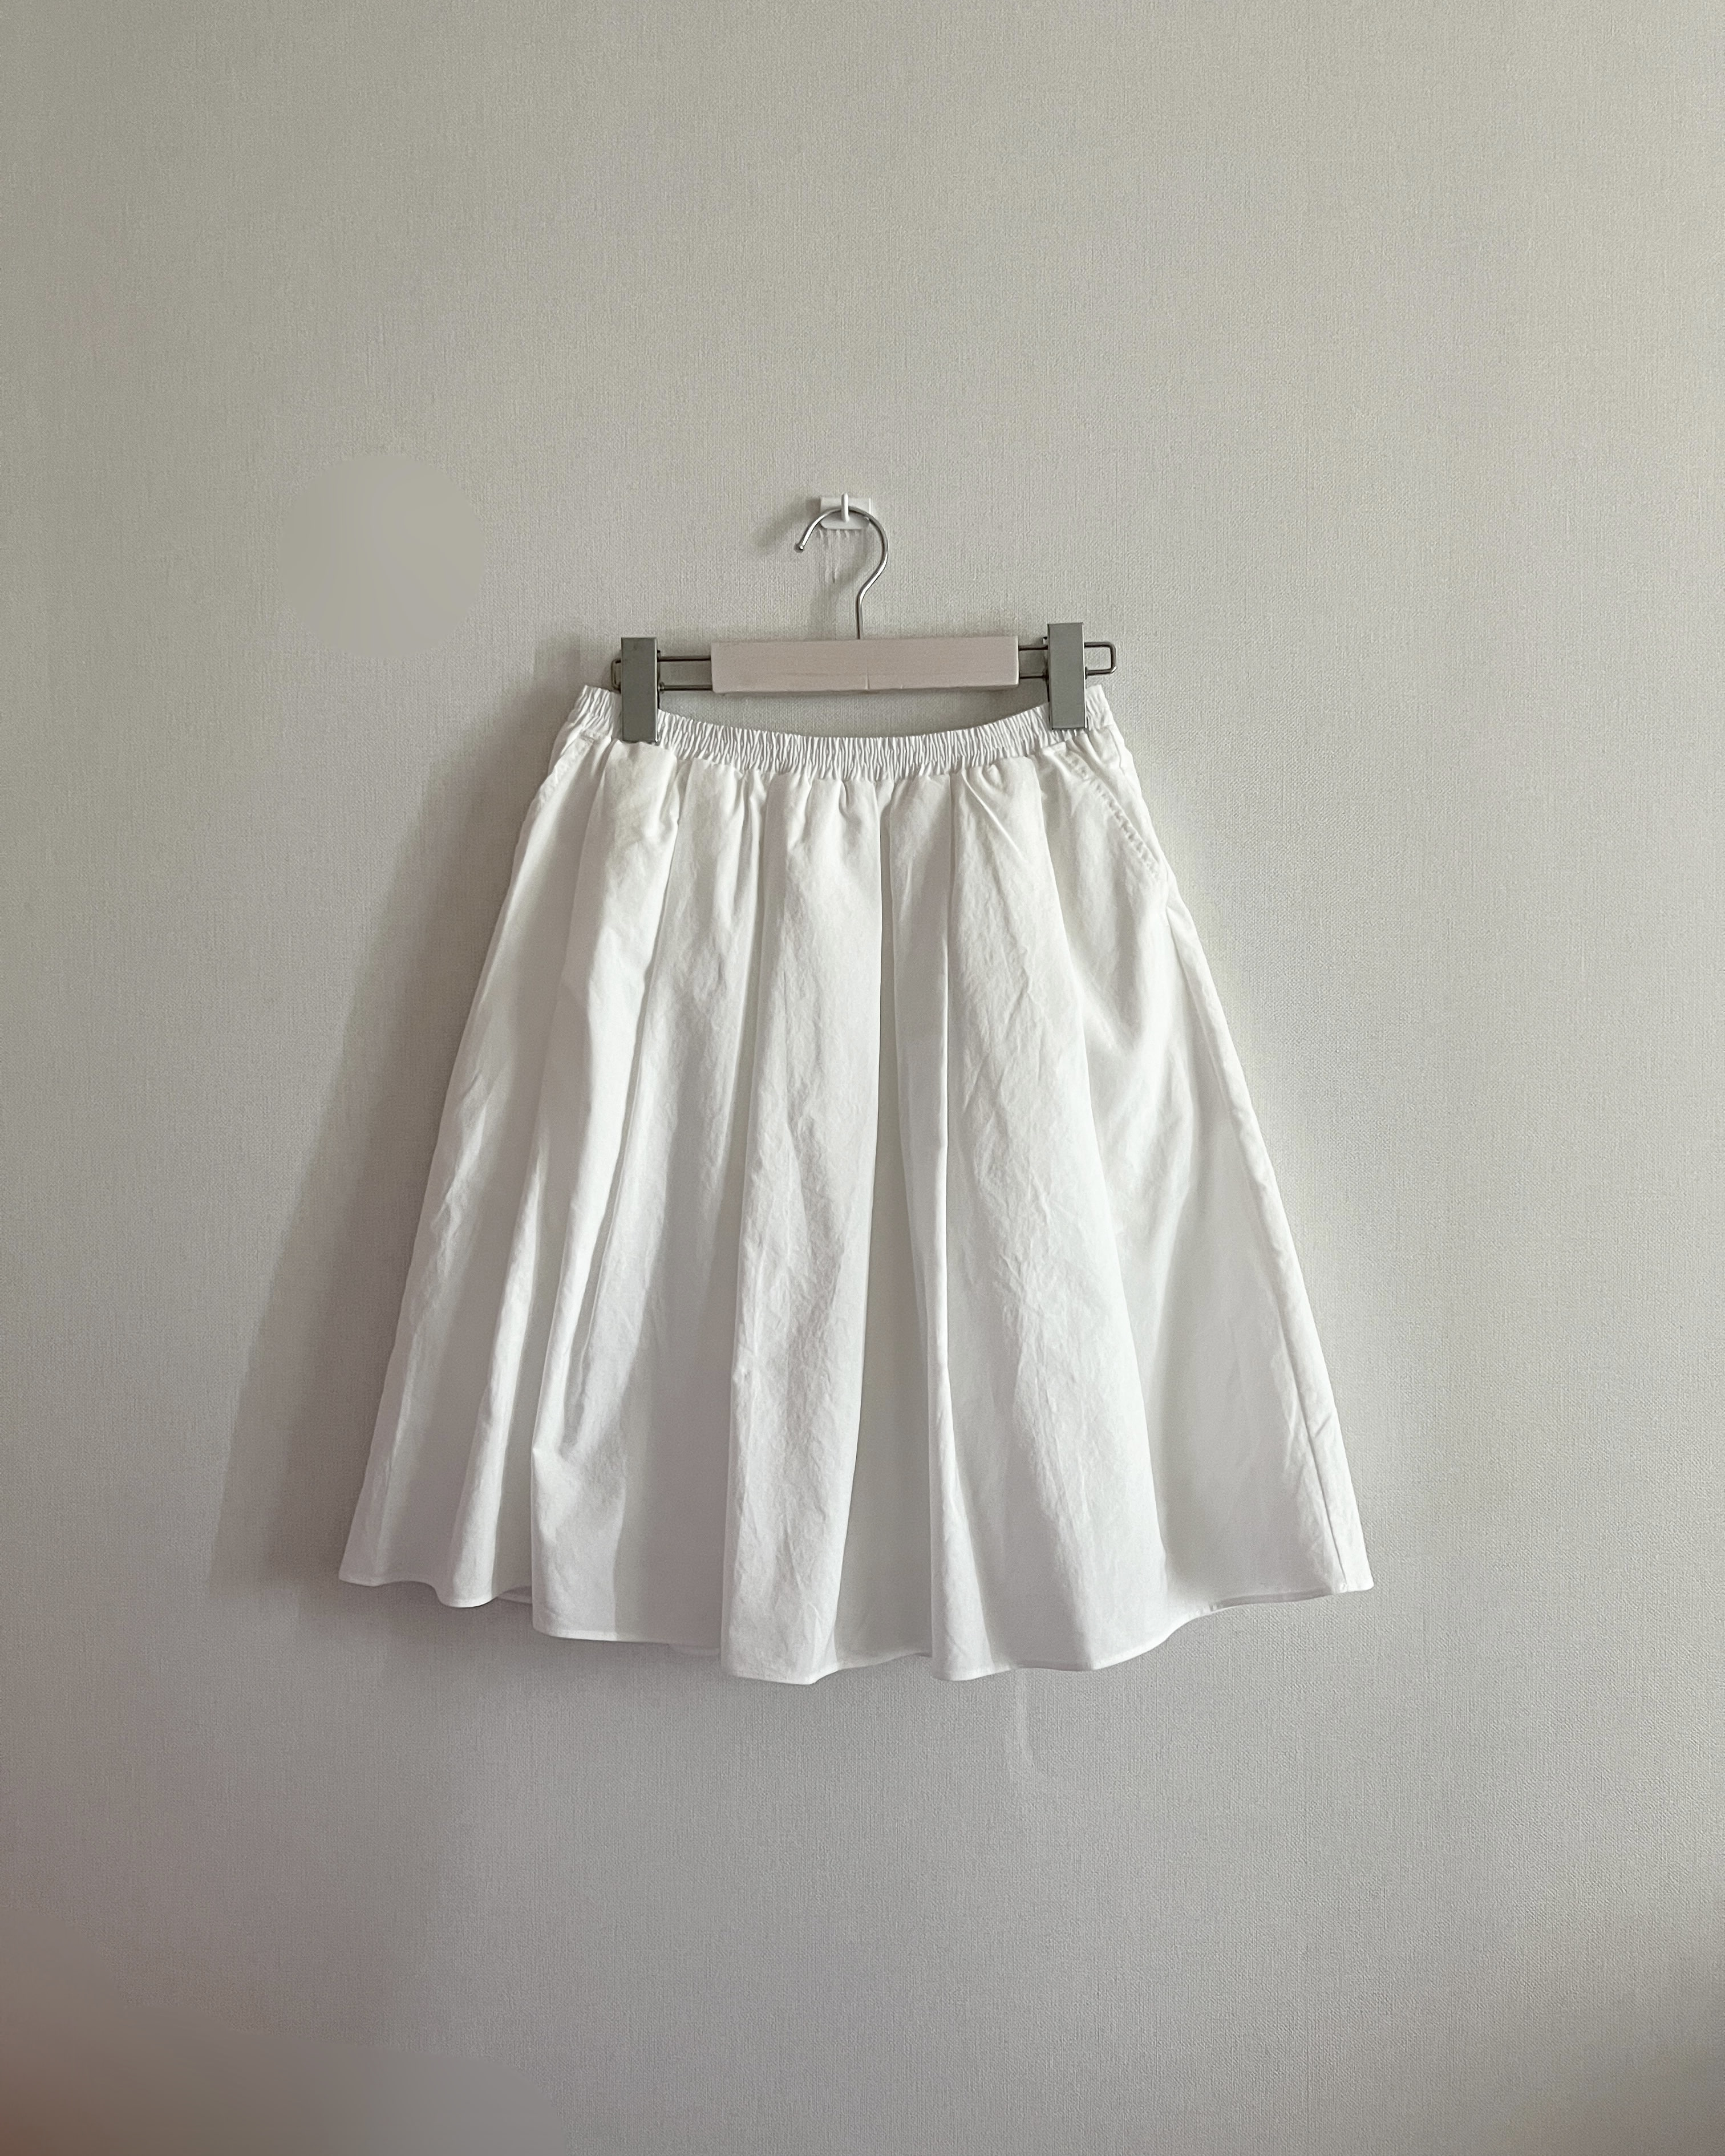 sally skirt